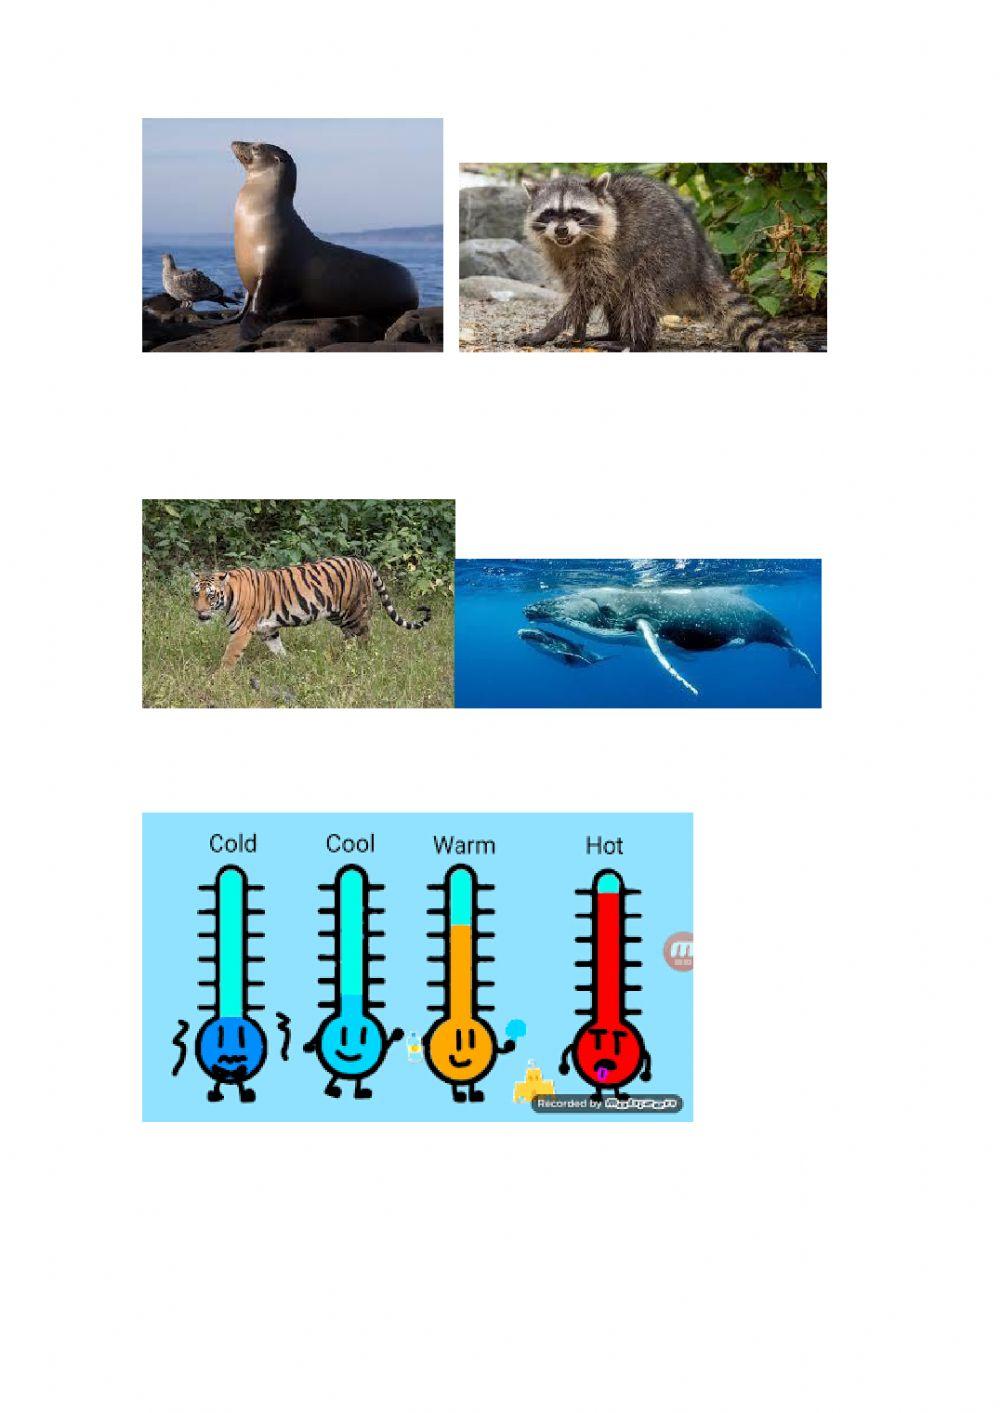 Animals and their habitats